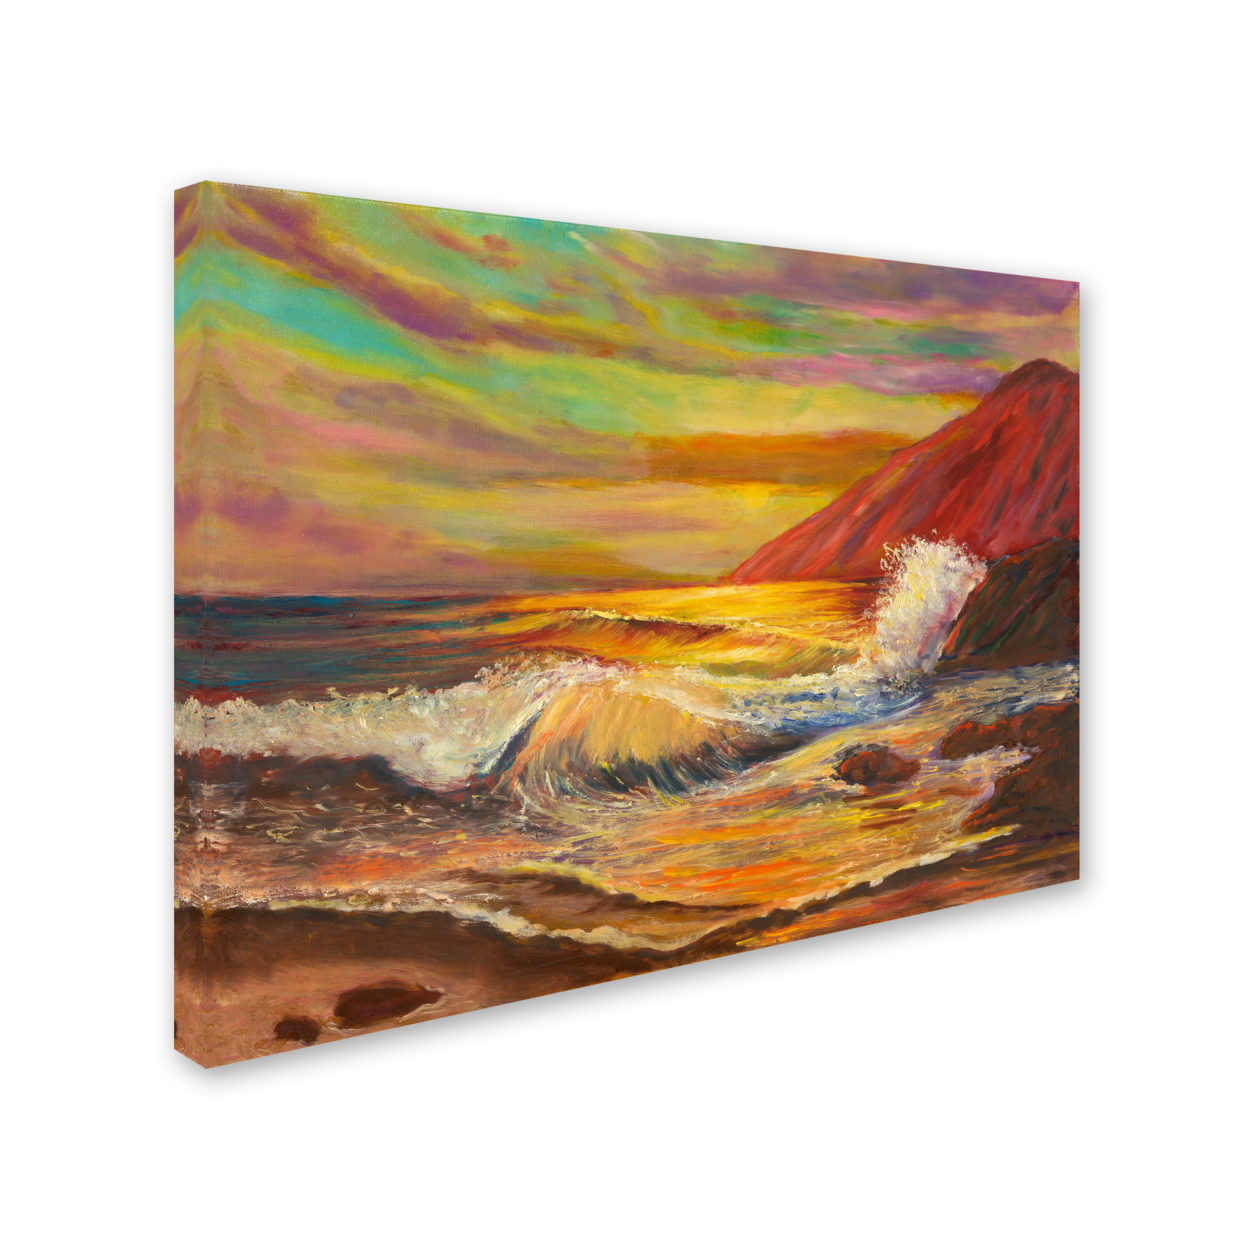 Manor Shadian 'Ka'ena Coast Sunset' 14 X 19 Canvas Art